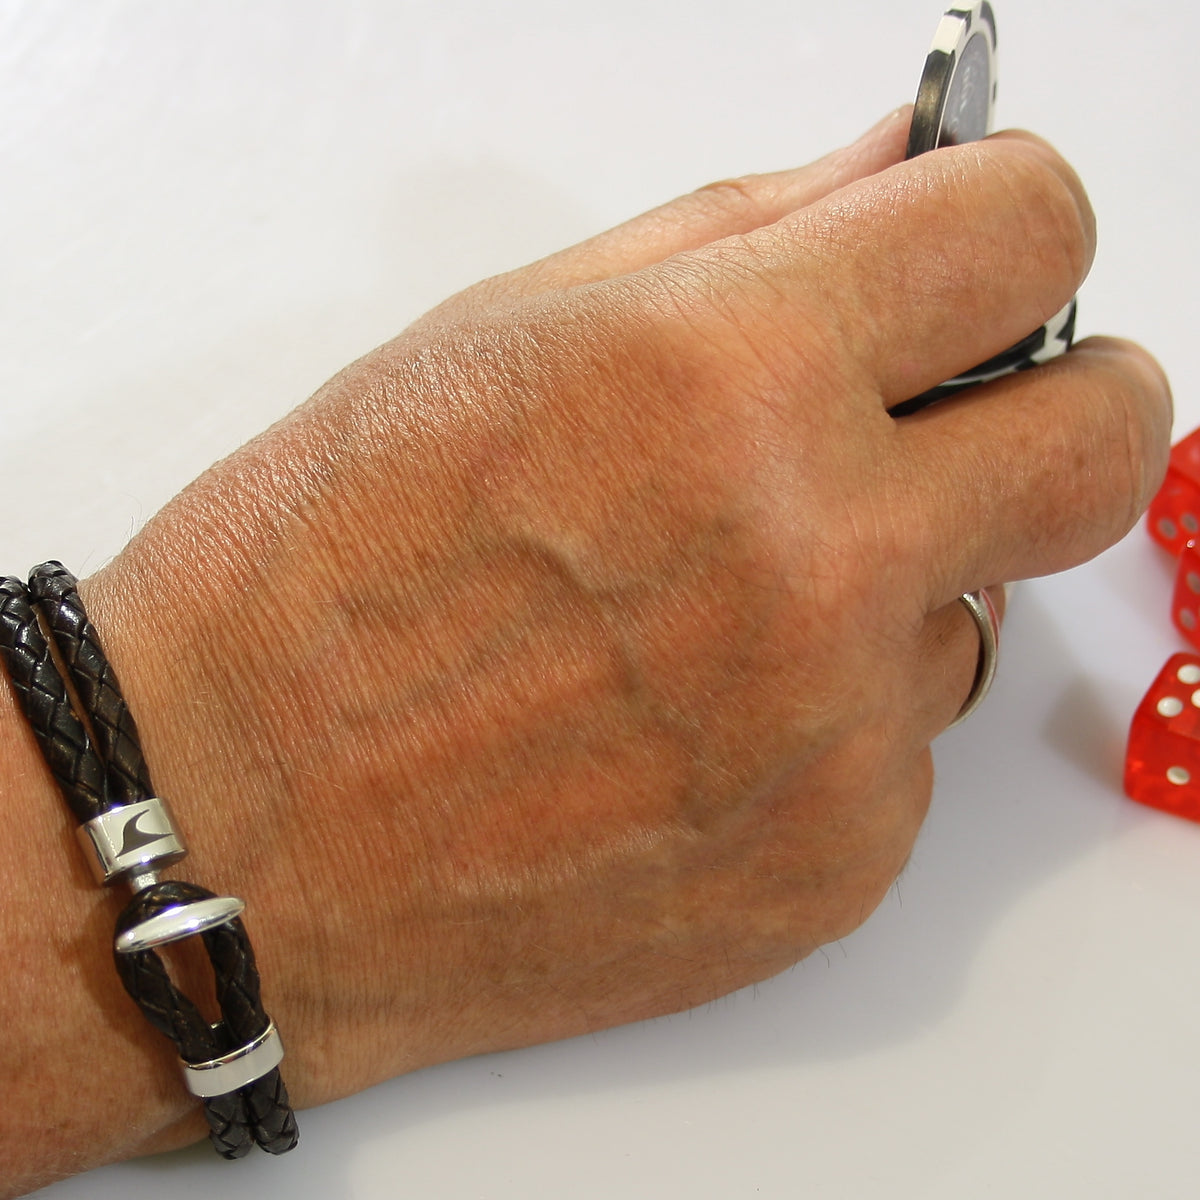 Herren-Leder-Armband-Aruba-braun-geflochten-Edelstahlverschluss-getragen-wavepirate-shop-f